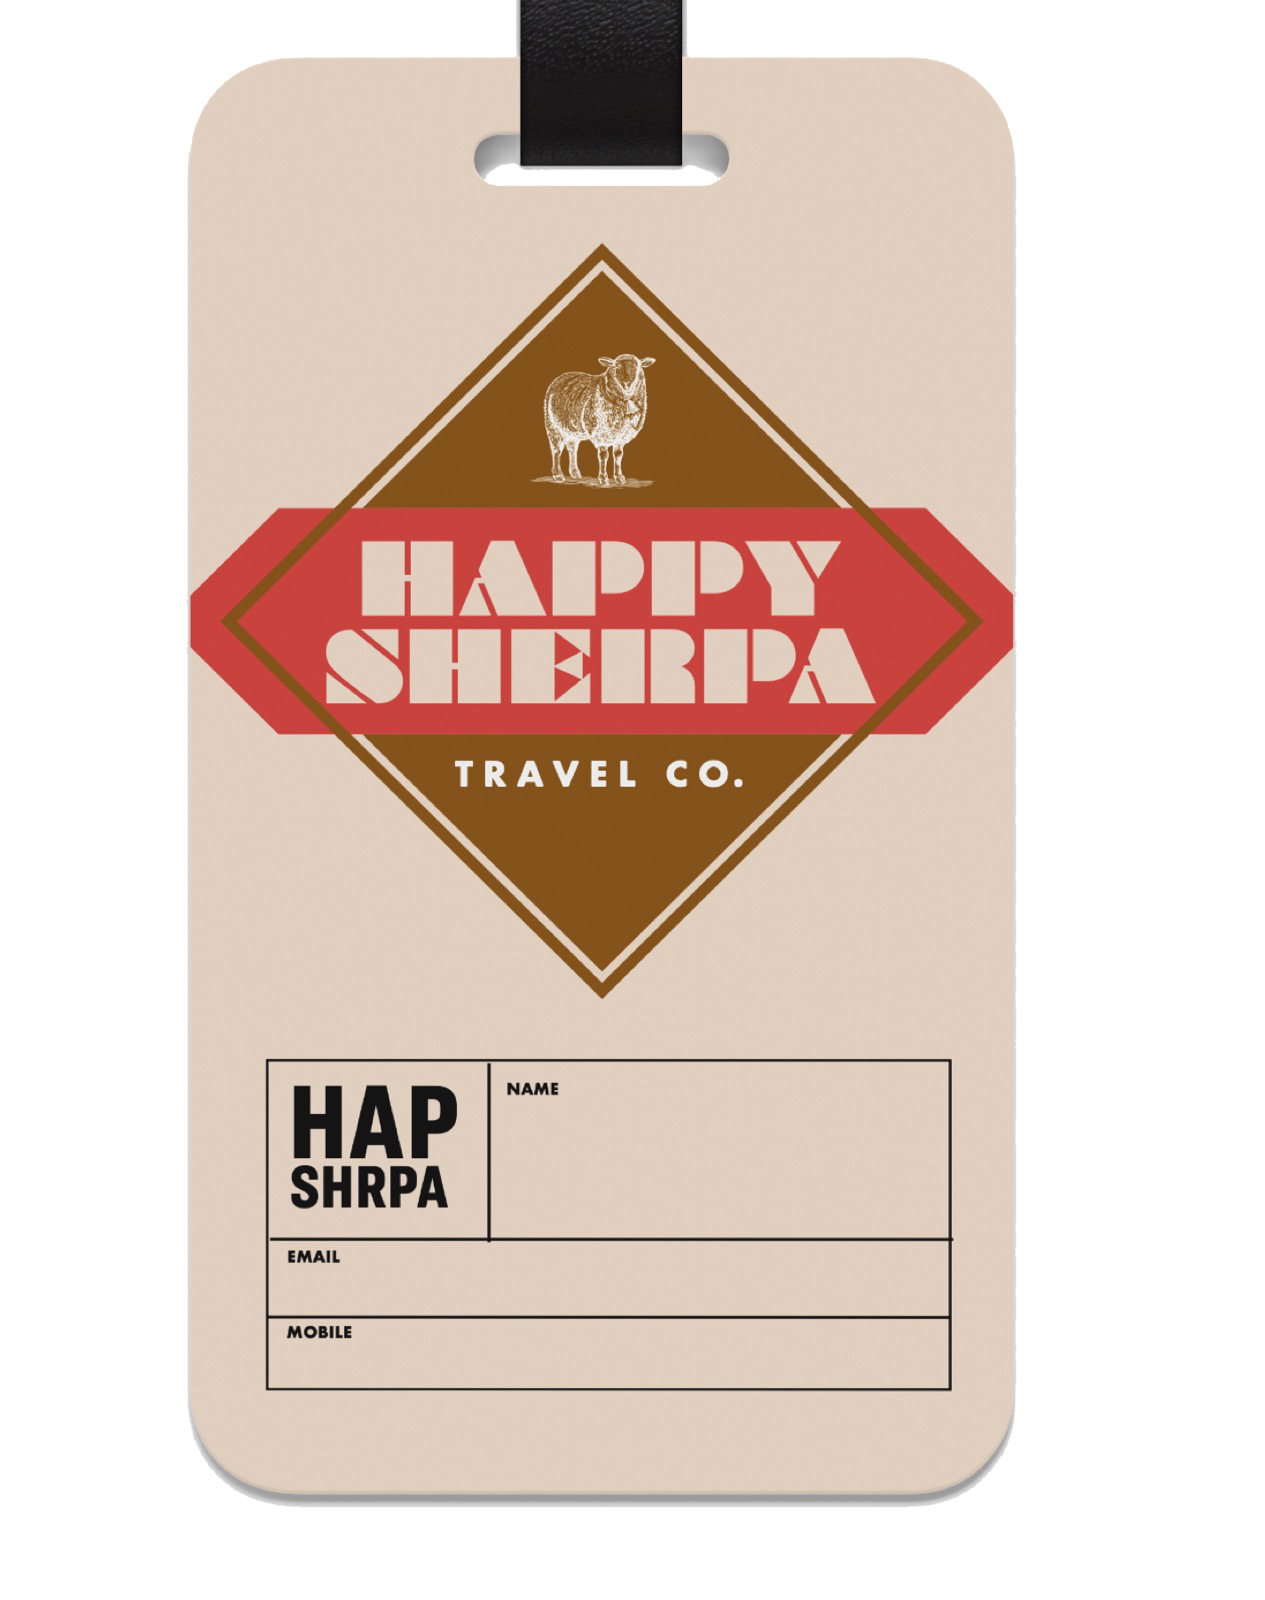 Happy Sherpa Travel Co.